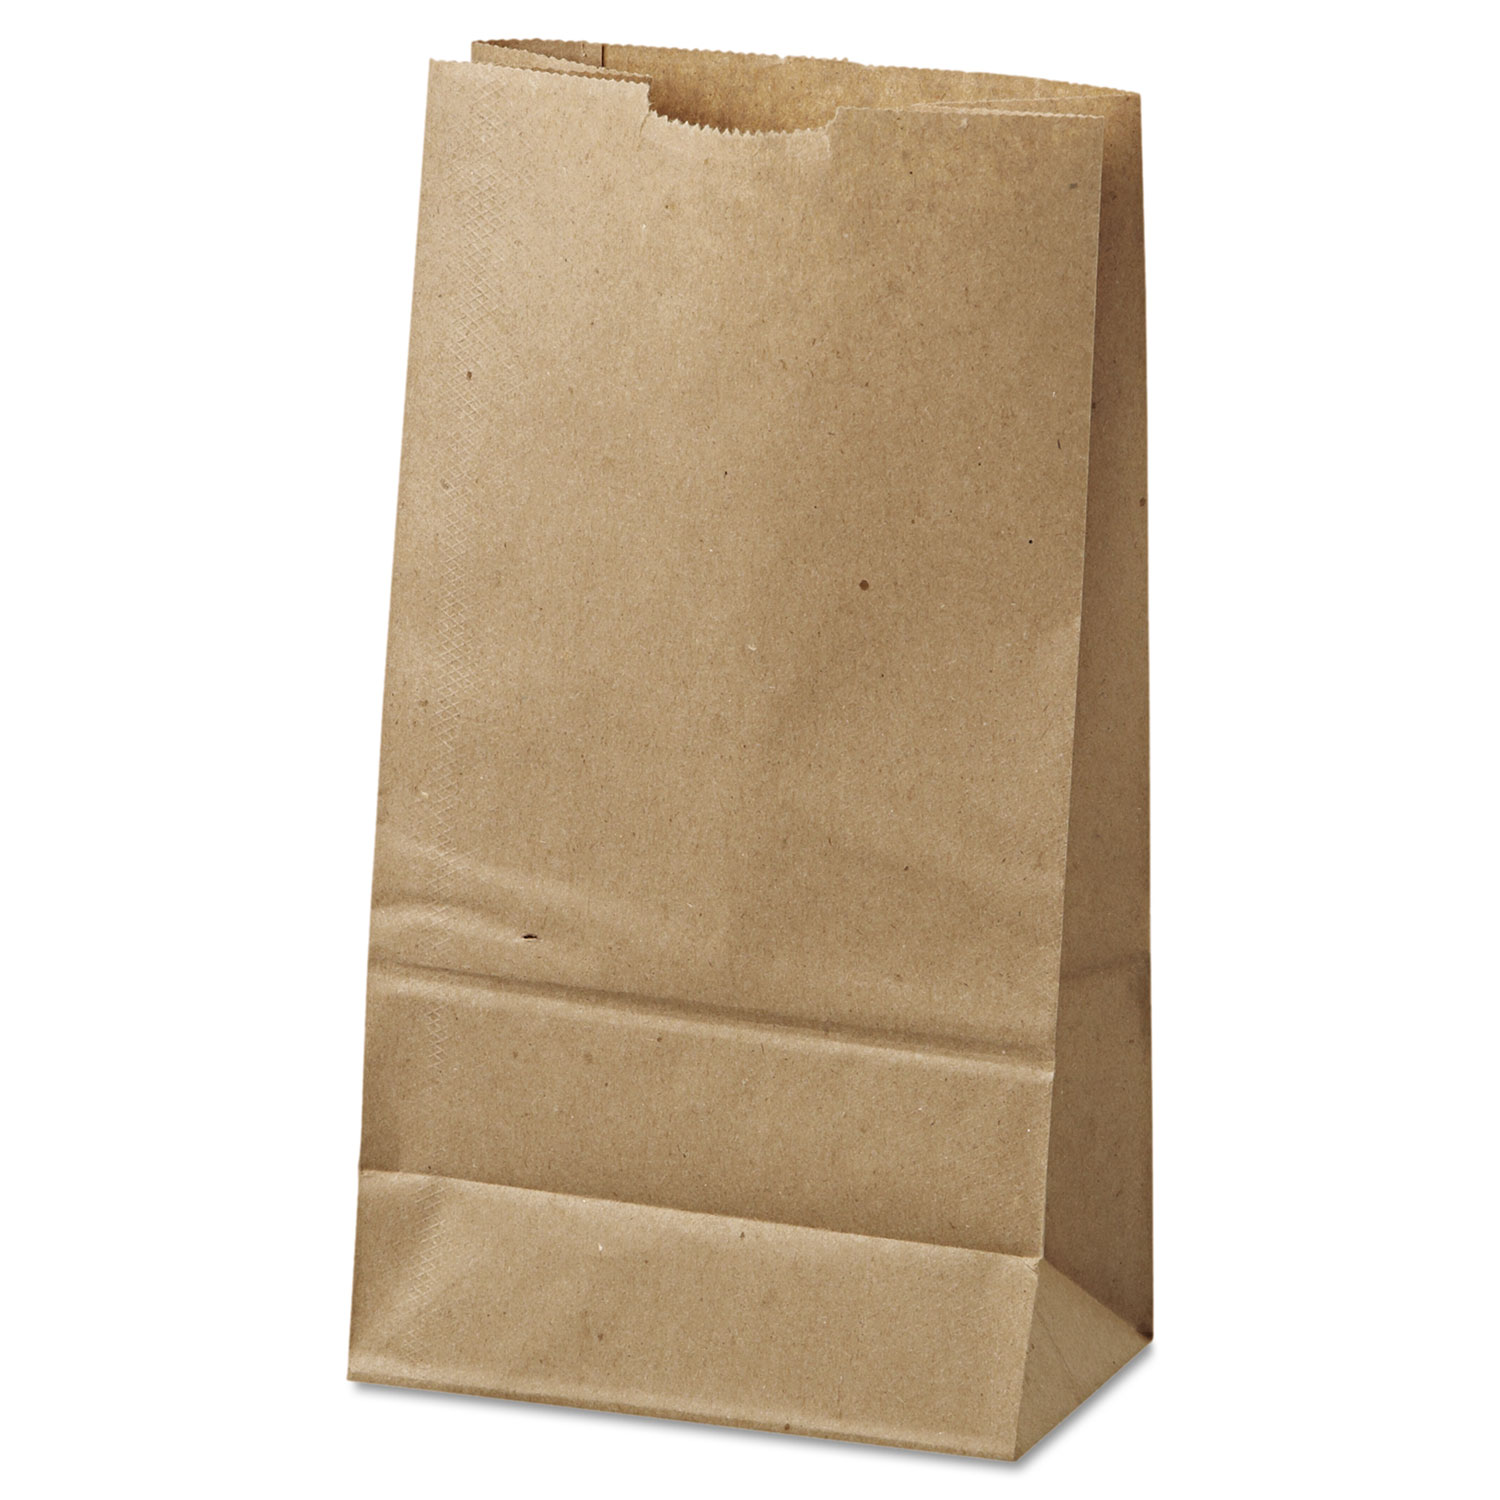  General 18406 Grocery Paper Bags, 35 lbs Capacity, #6, 6w x 3.63d x 11.06h, Kraft, 500 Bags (BAGGK6500) 